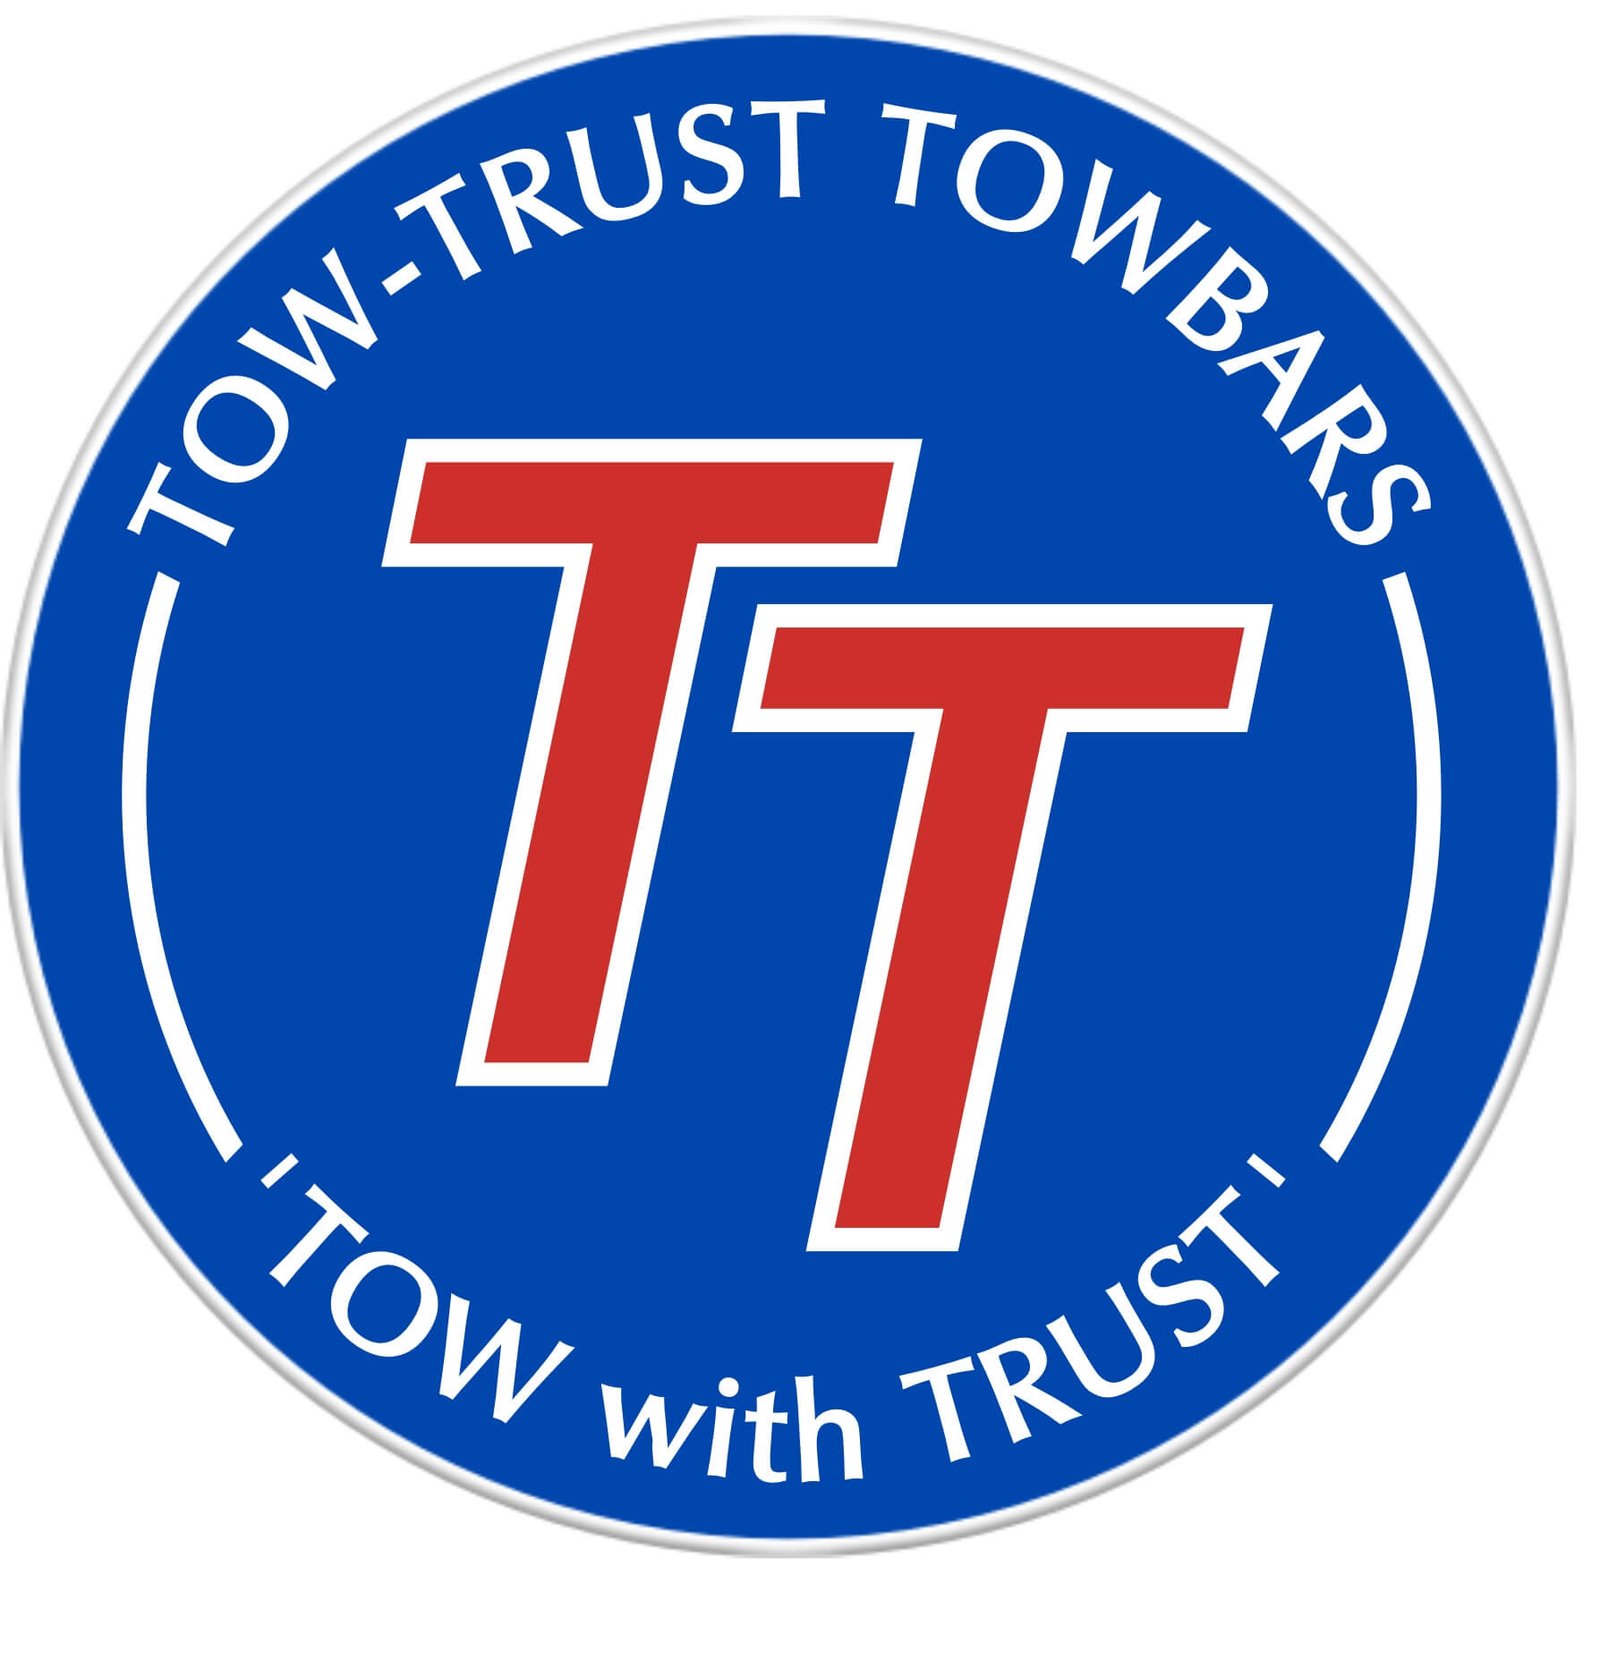 TOW TRUST